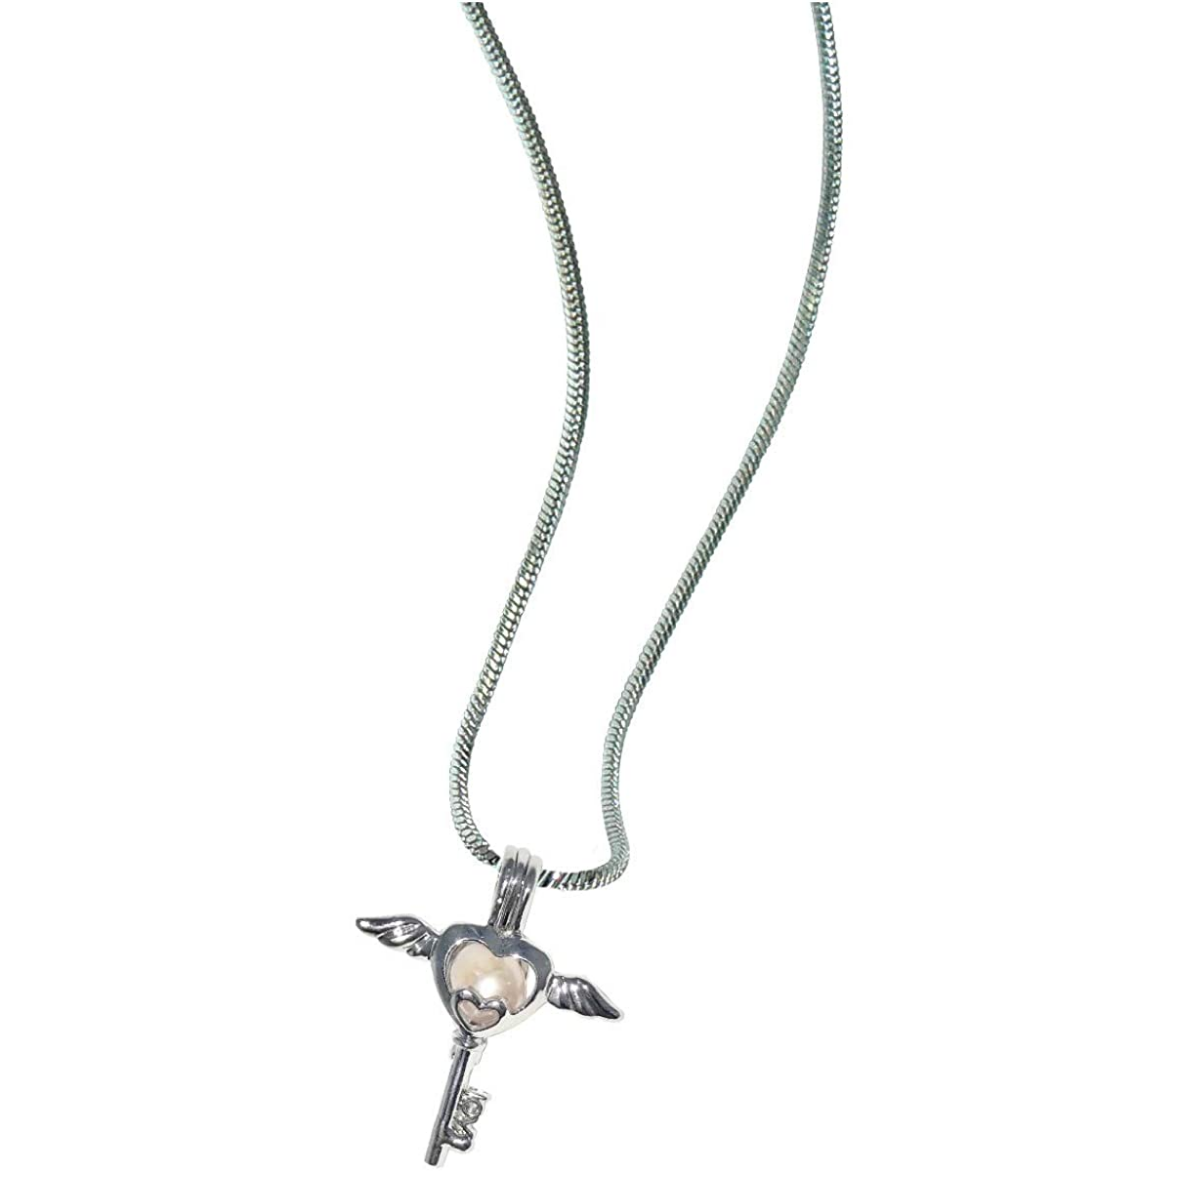 My Inspirations Precious Pearl - Rhodium Necklace